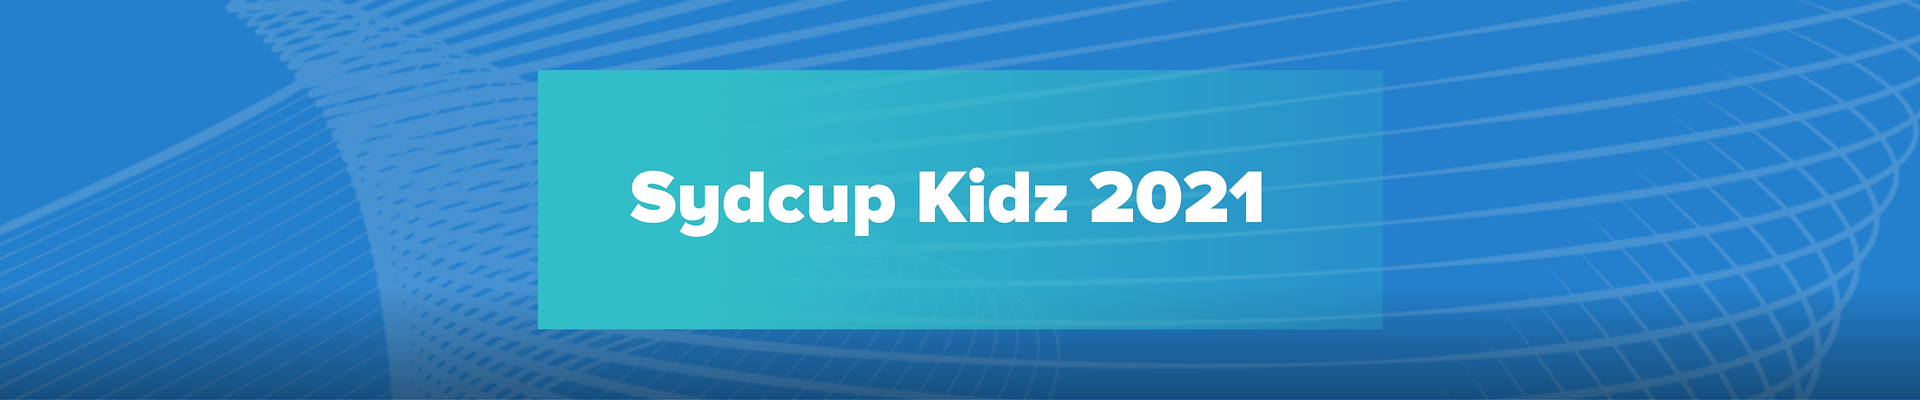 Syd Cup Kidz 2021, Afdeling 1 Haderslev